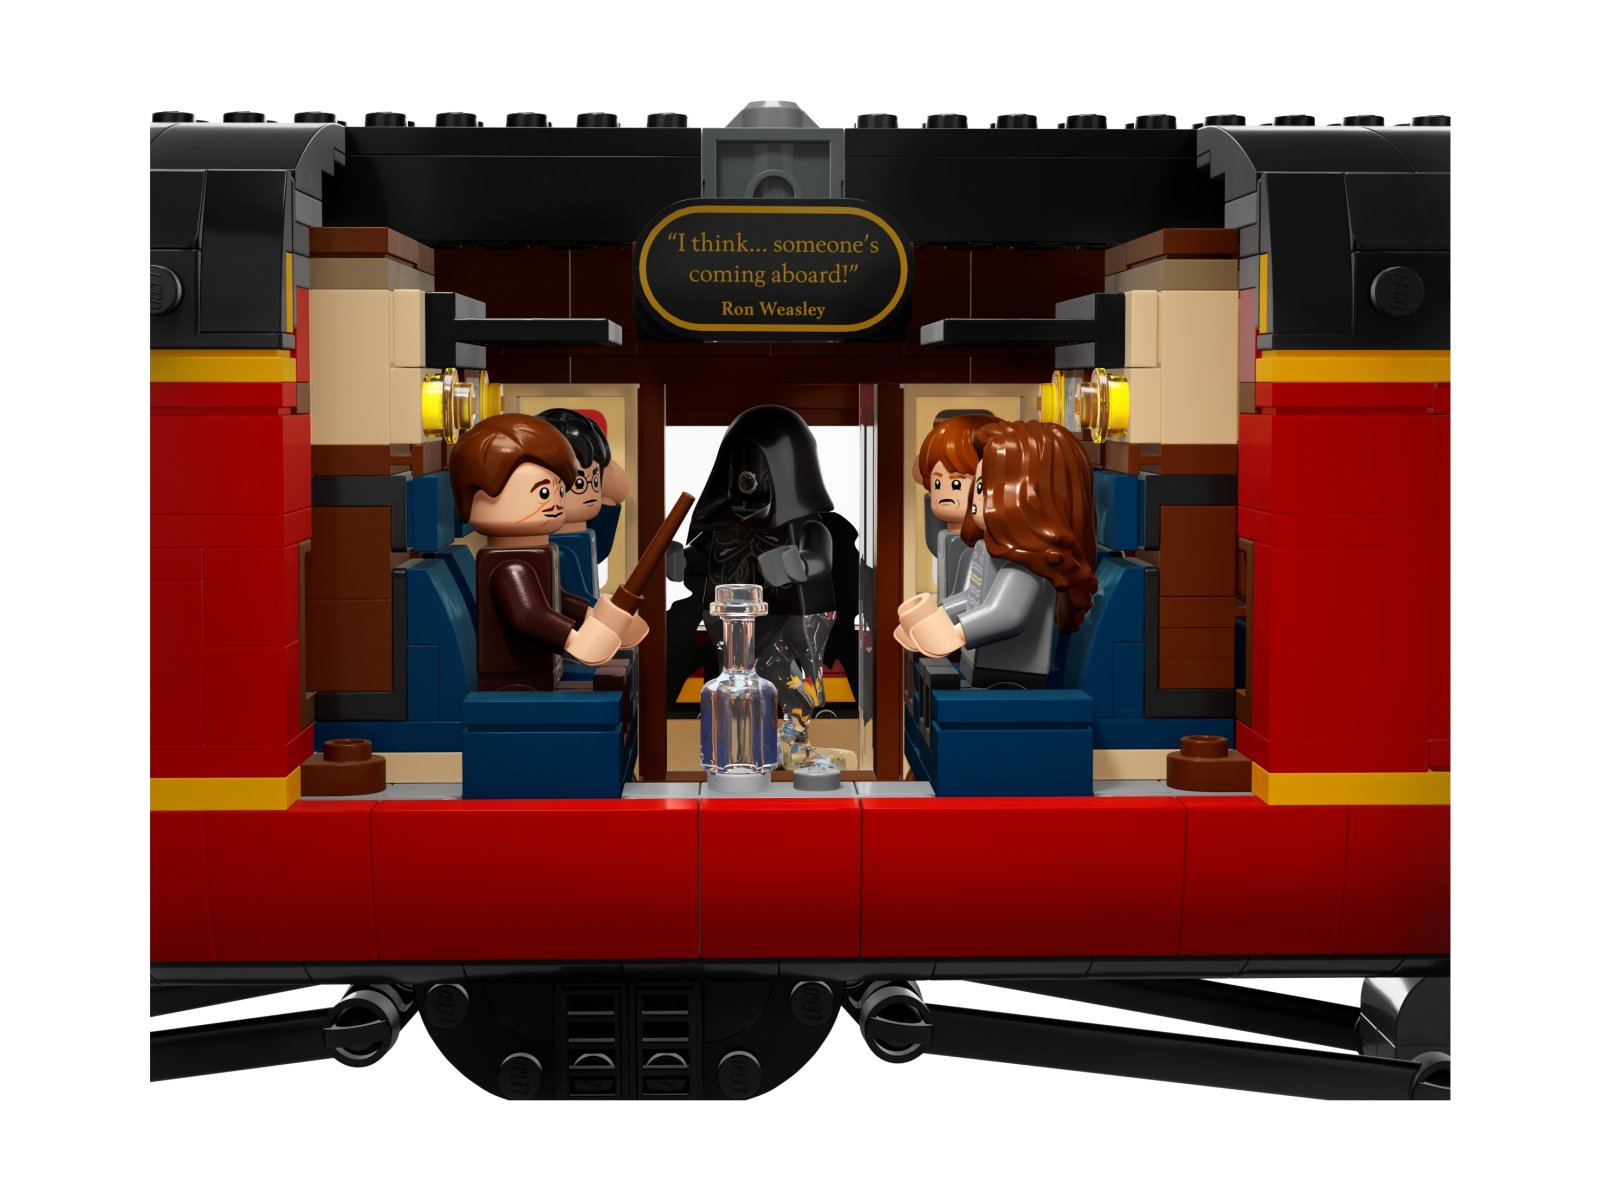 LEGO Harry Potter 76405 Ekspres do Hogwartu™ — edycja kolekcjonerska